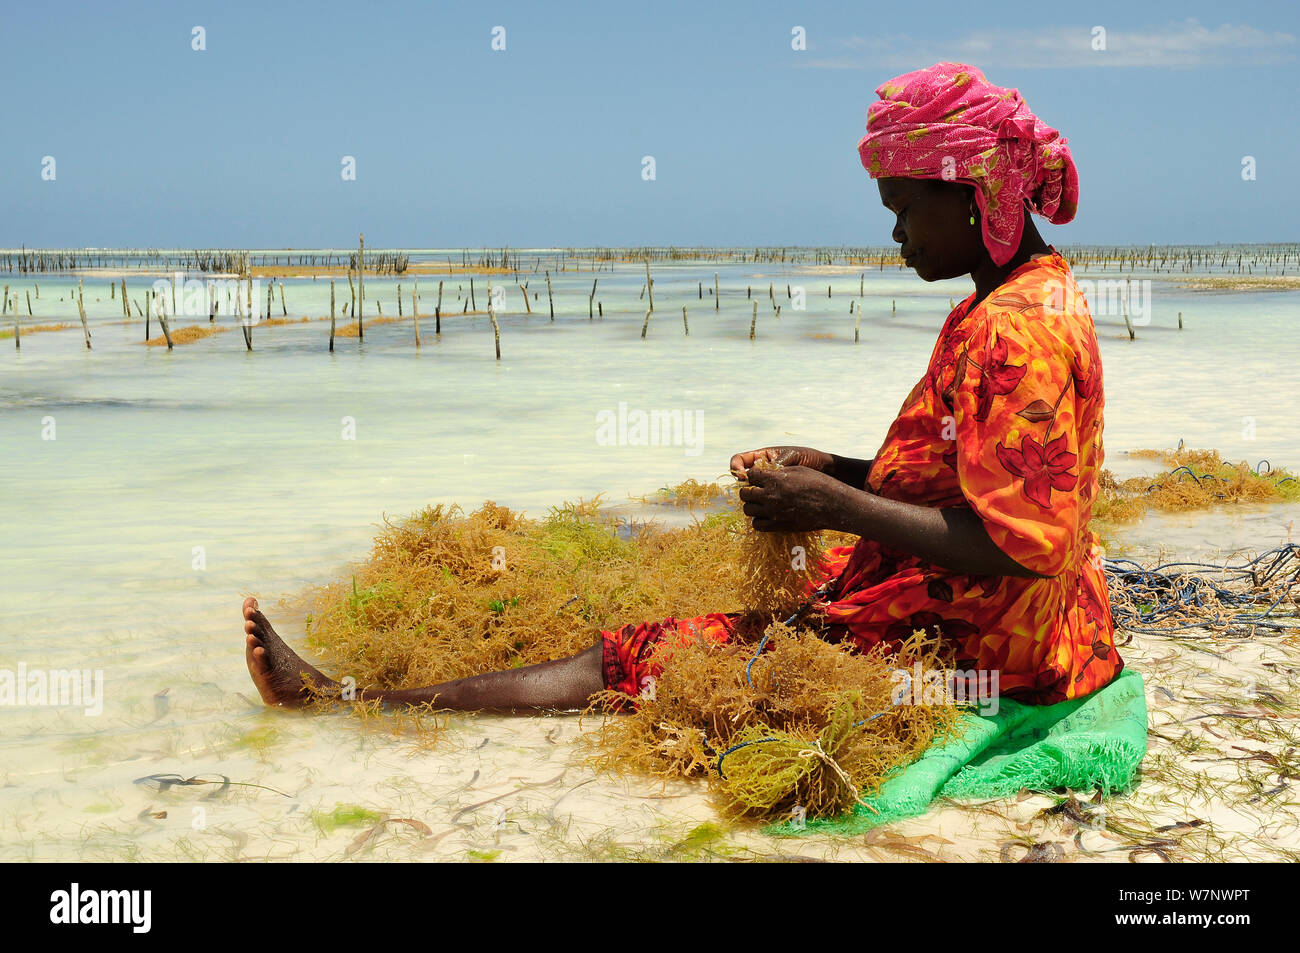 Woman sitting on beach sorting the seaweed she has gathered, Jambiani East Coast, Zanzibar, Tanzania Stock Photo